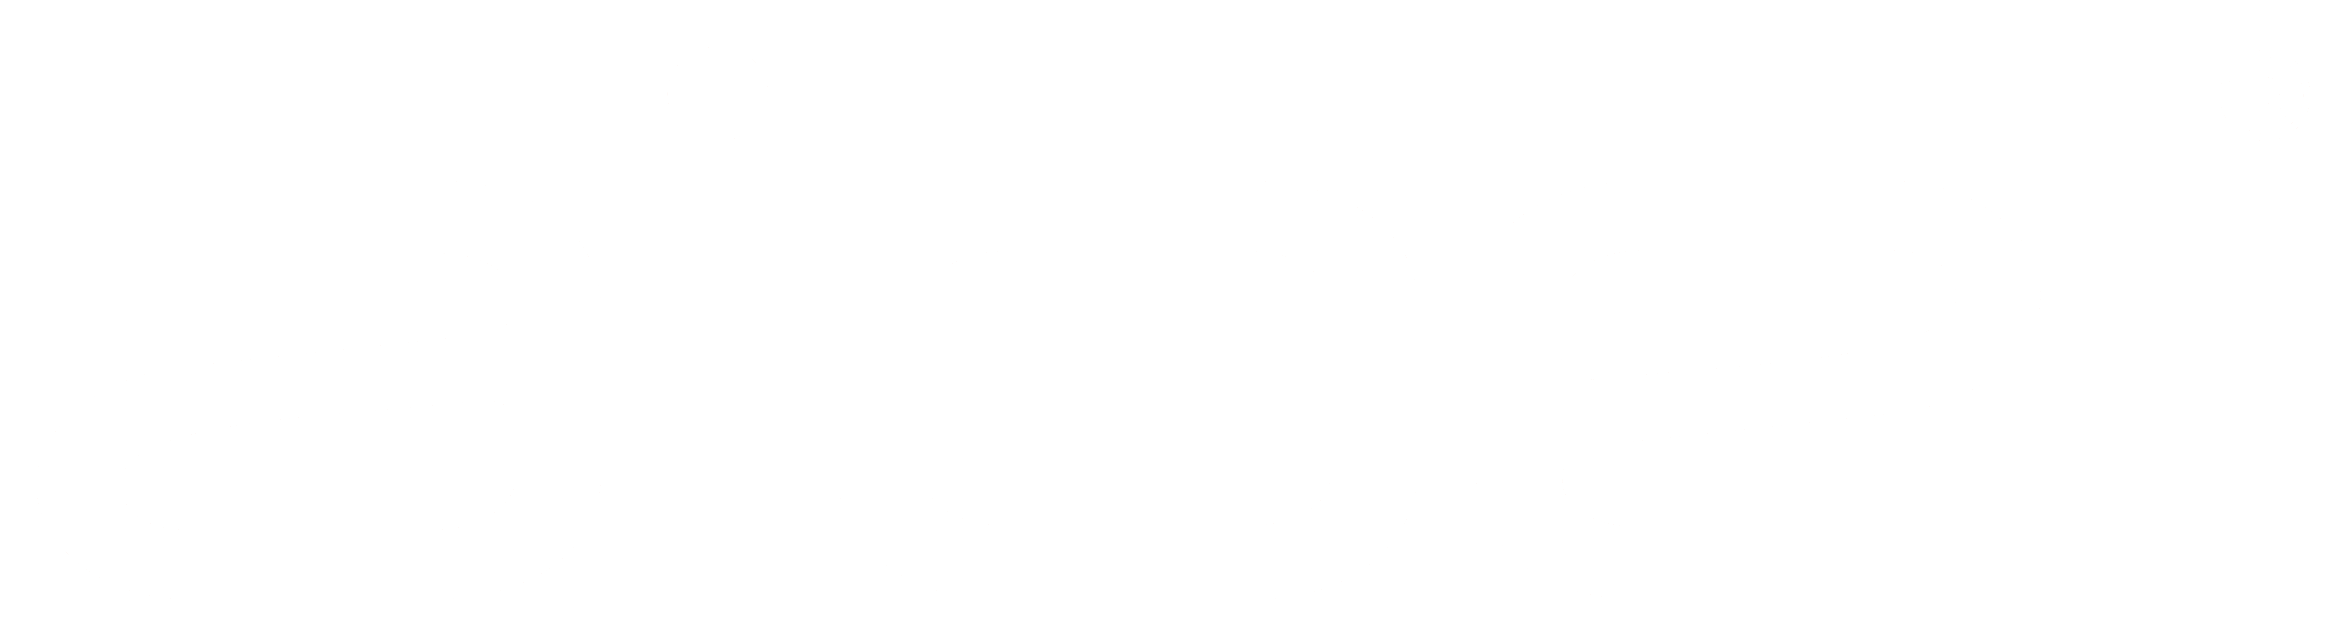 Aibel+logo+white+transparent